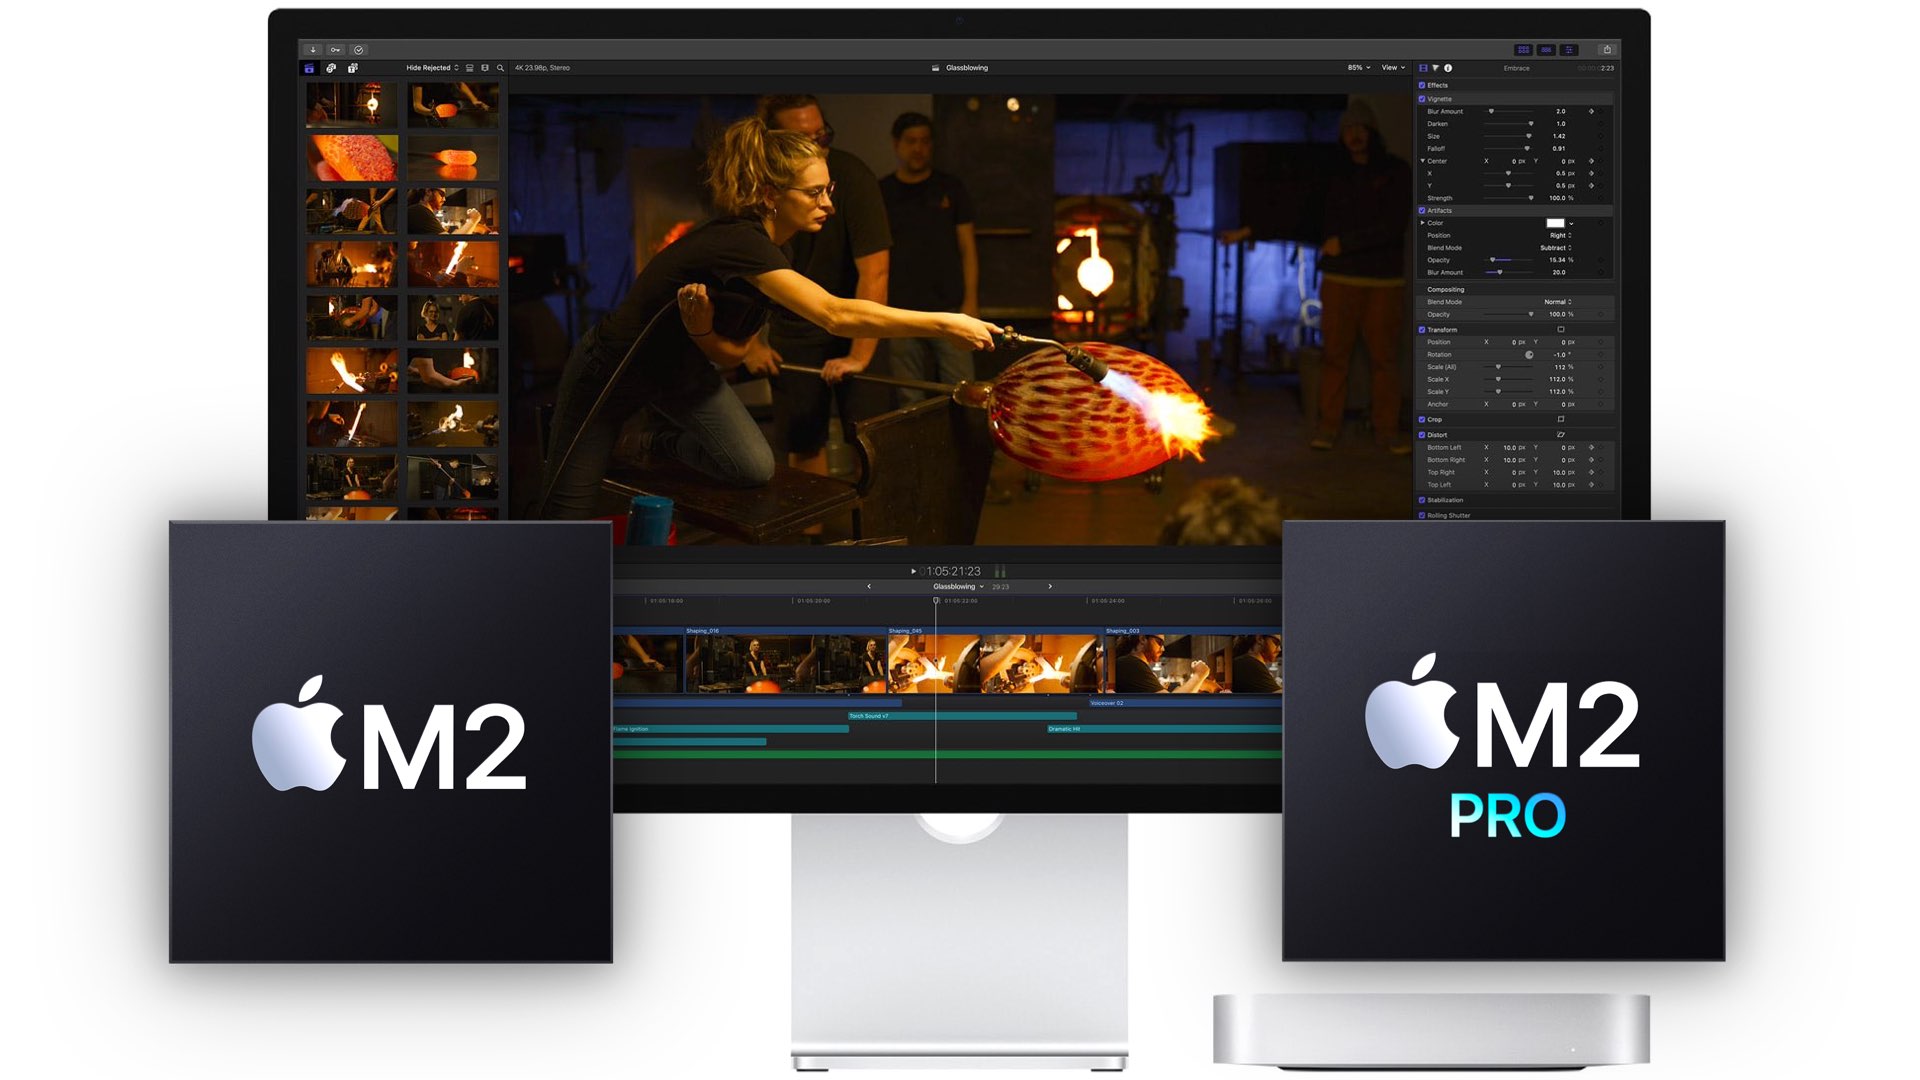 Apple Mac Mini M2: Good Enough for Professional Video Editing?